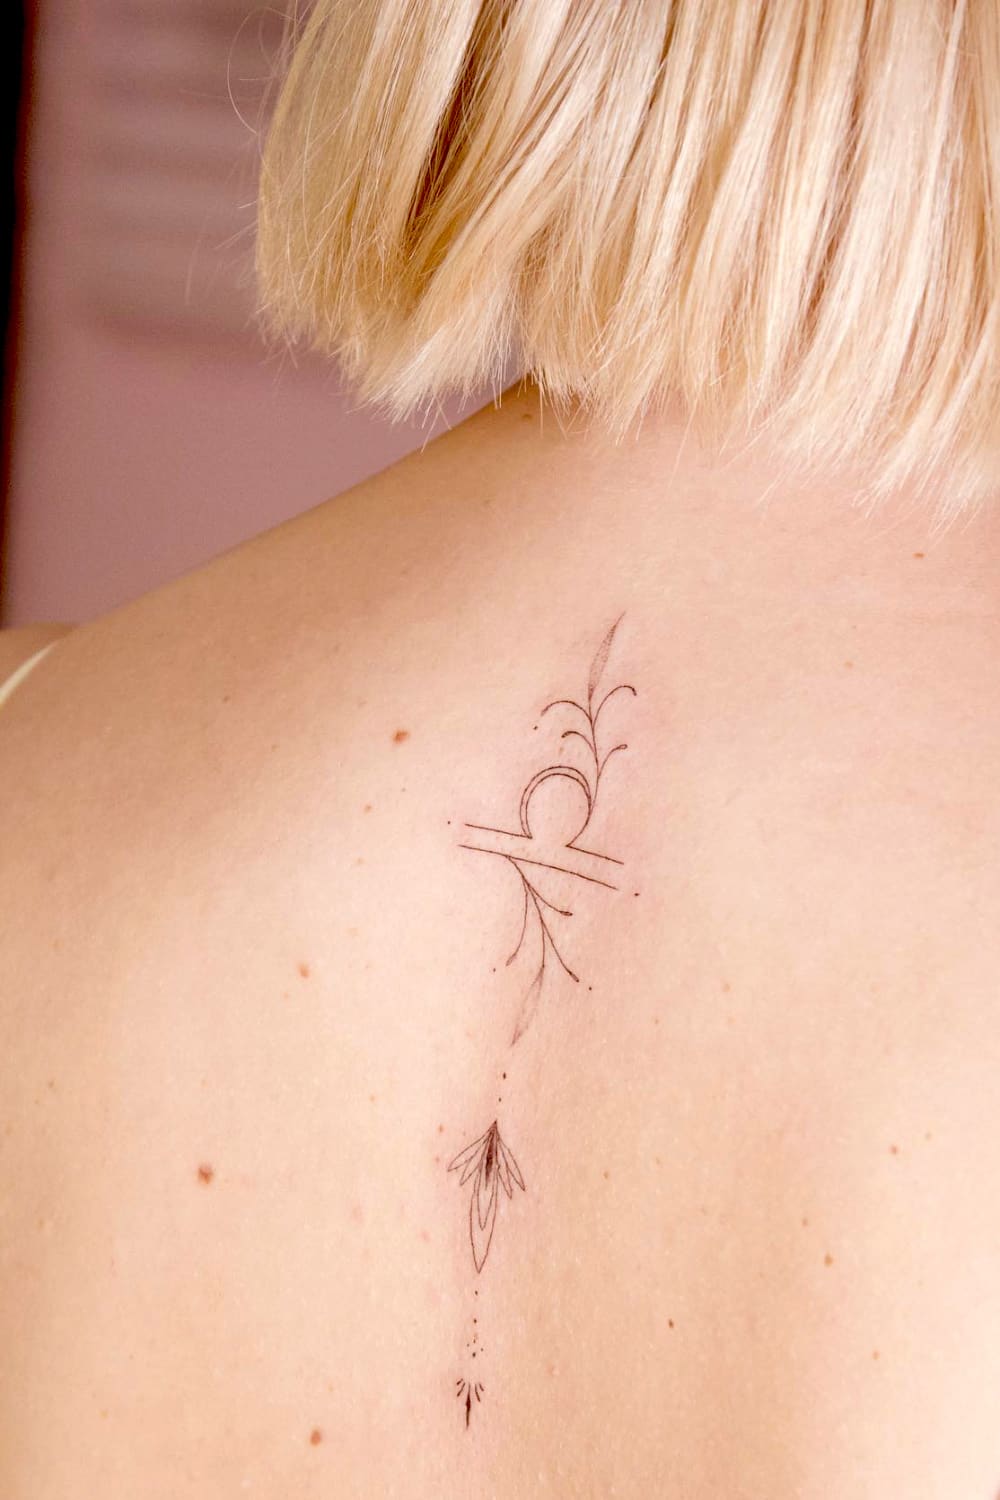 Libra Tattoo On the Back